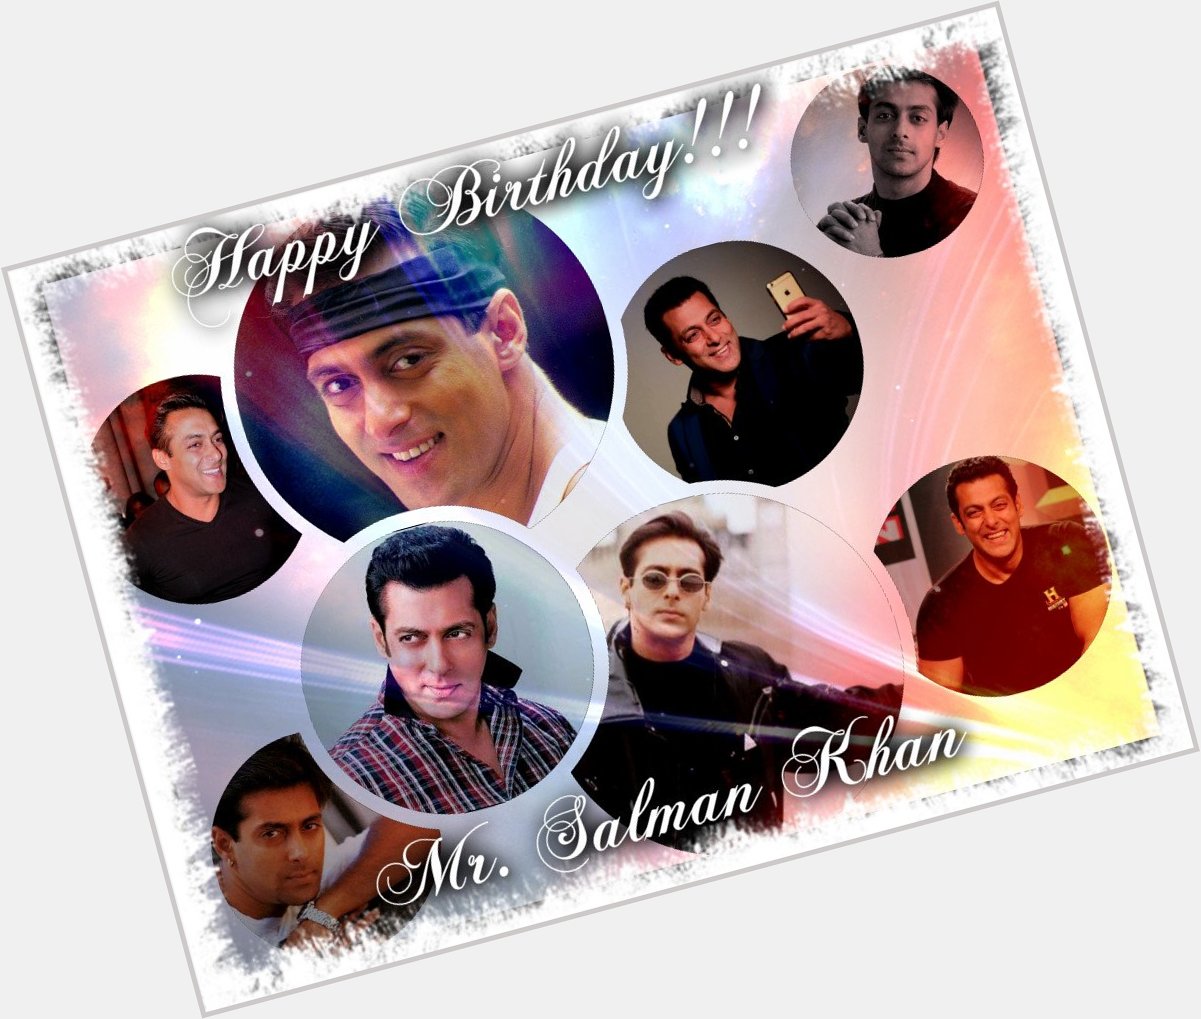 Happy Birthday!!!
Mr. Salman Khan 